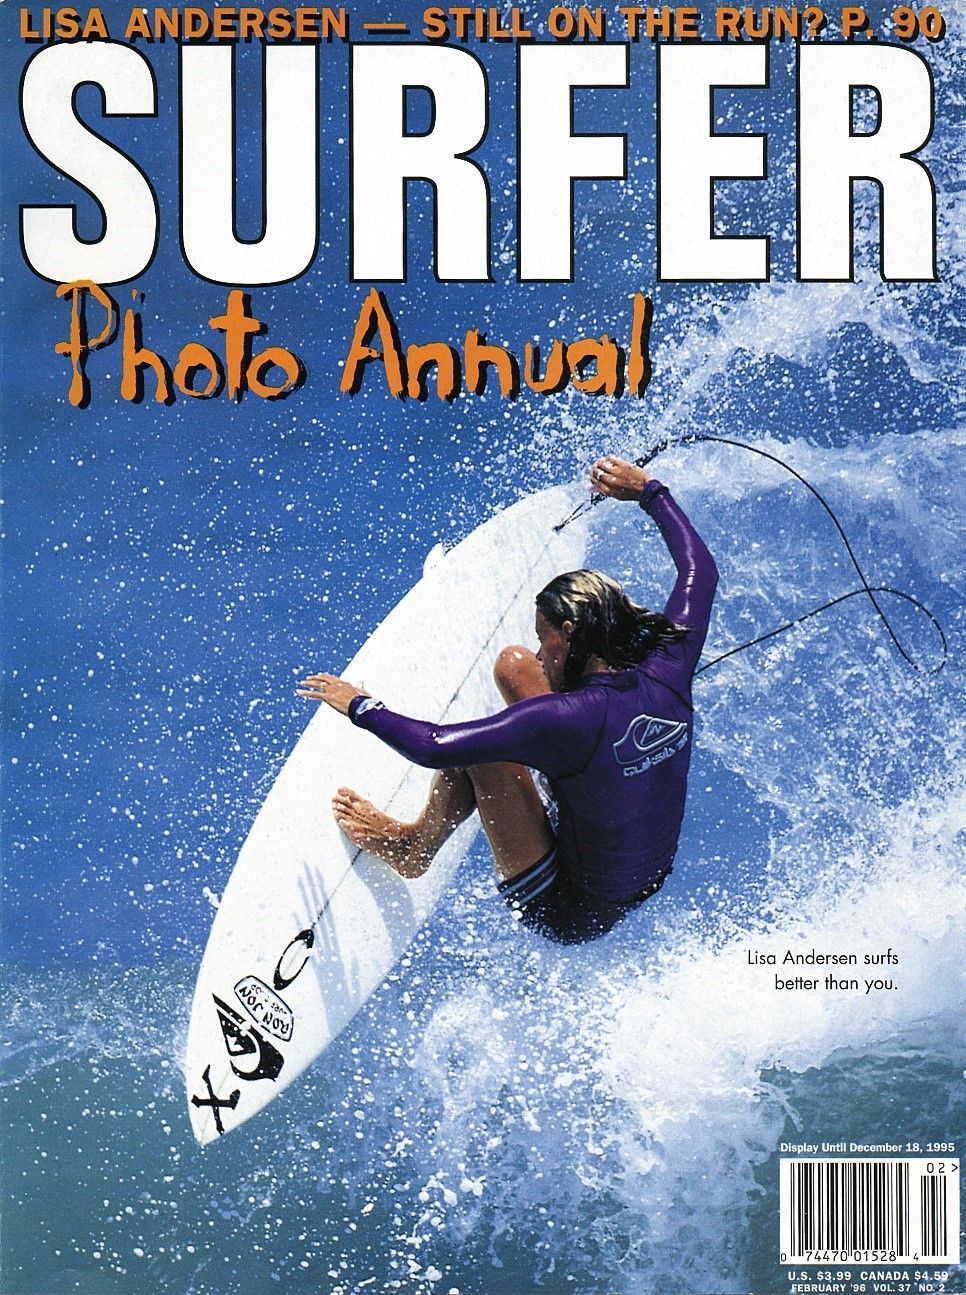 Lisa Andersen surf femminile